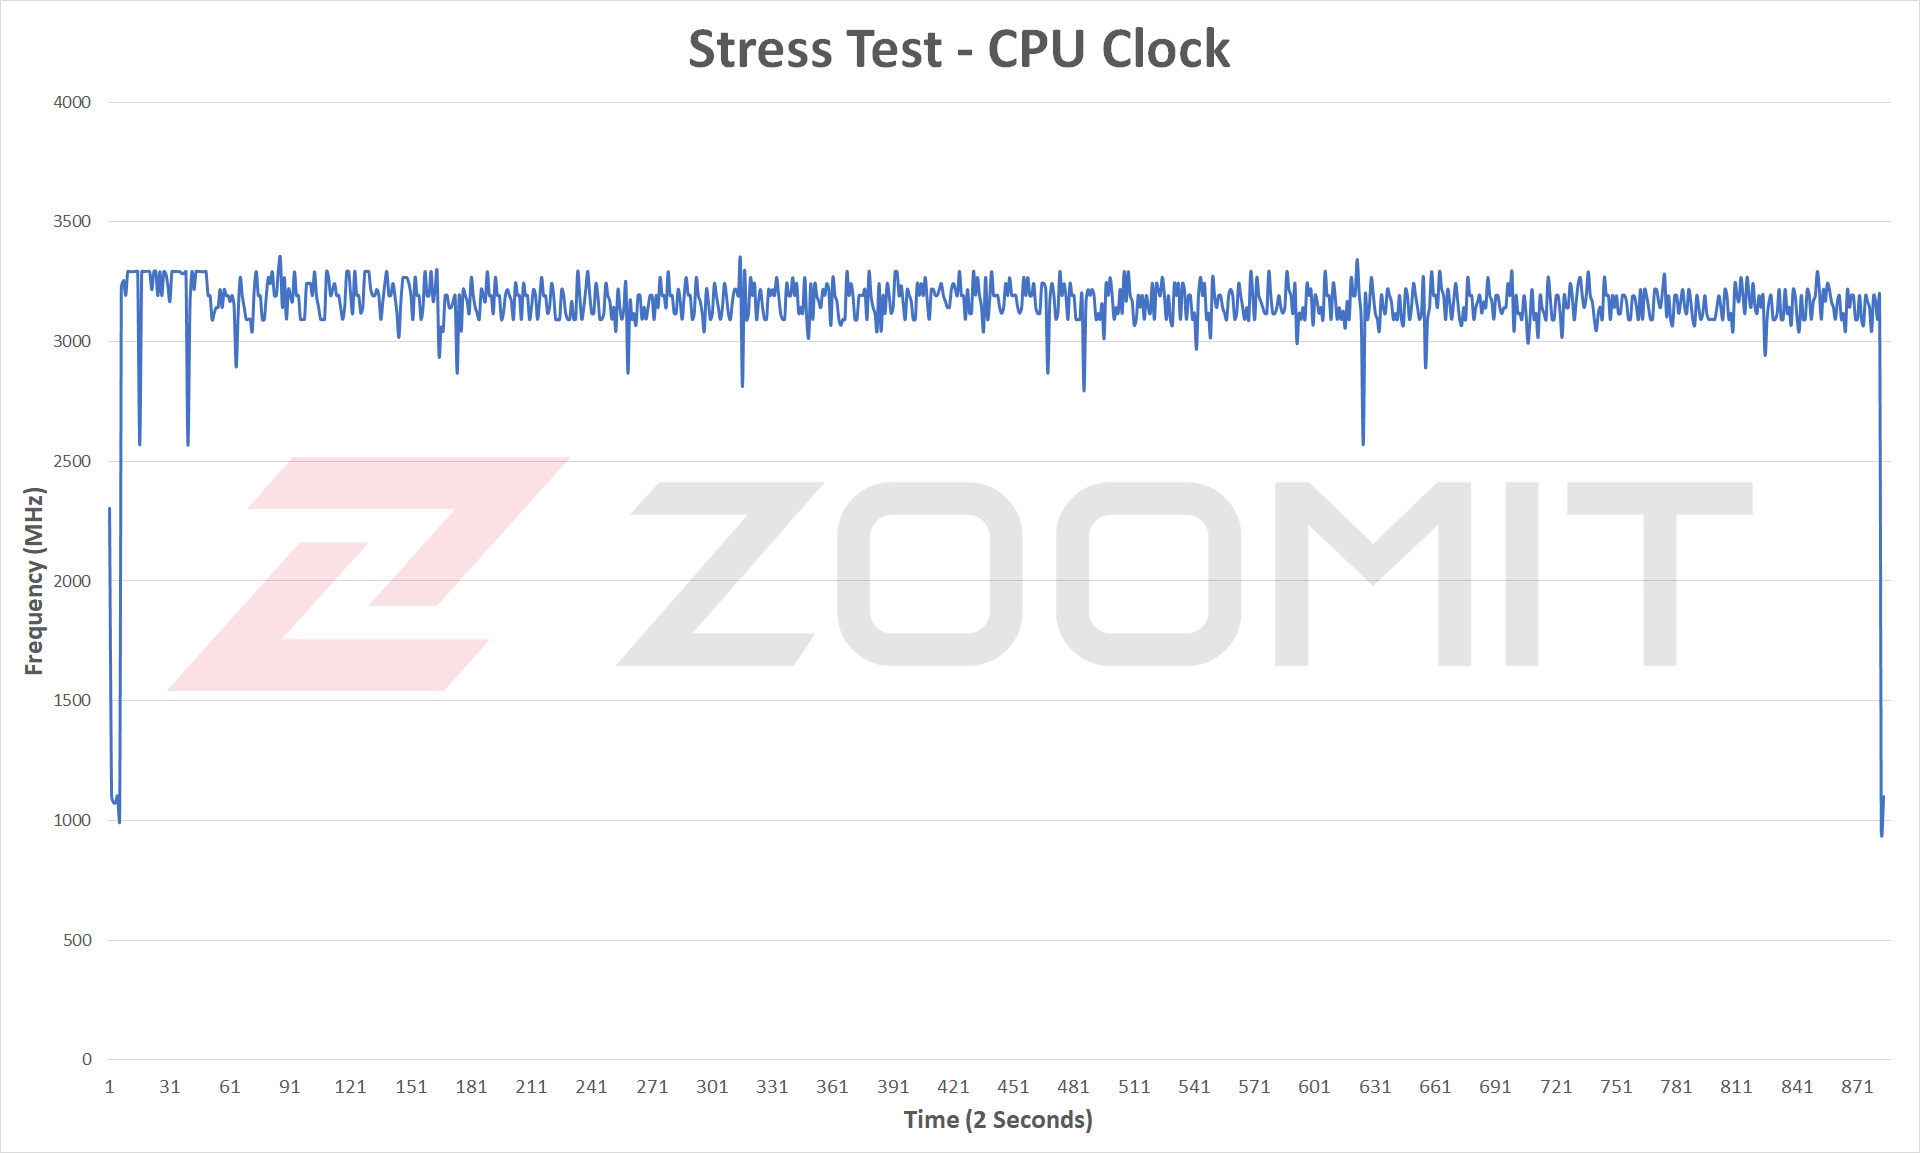 CPU frequency in multi-core test